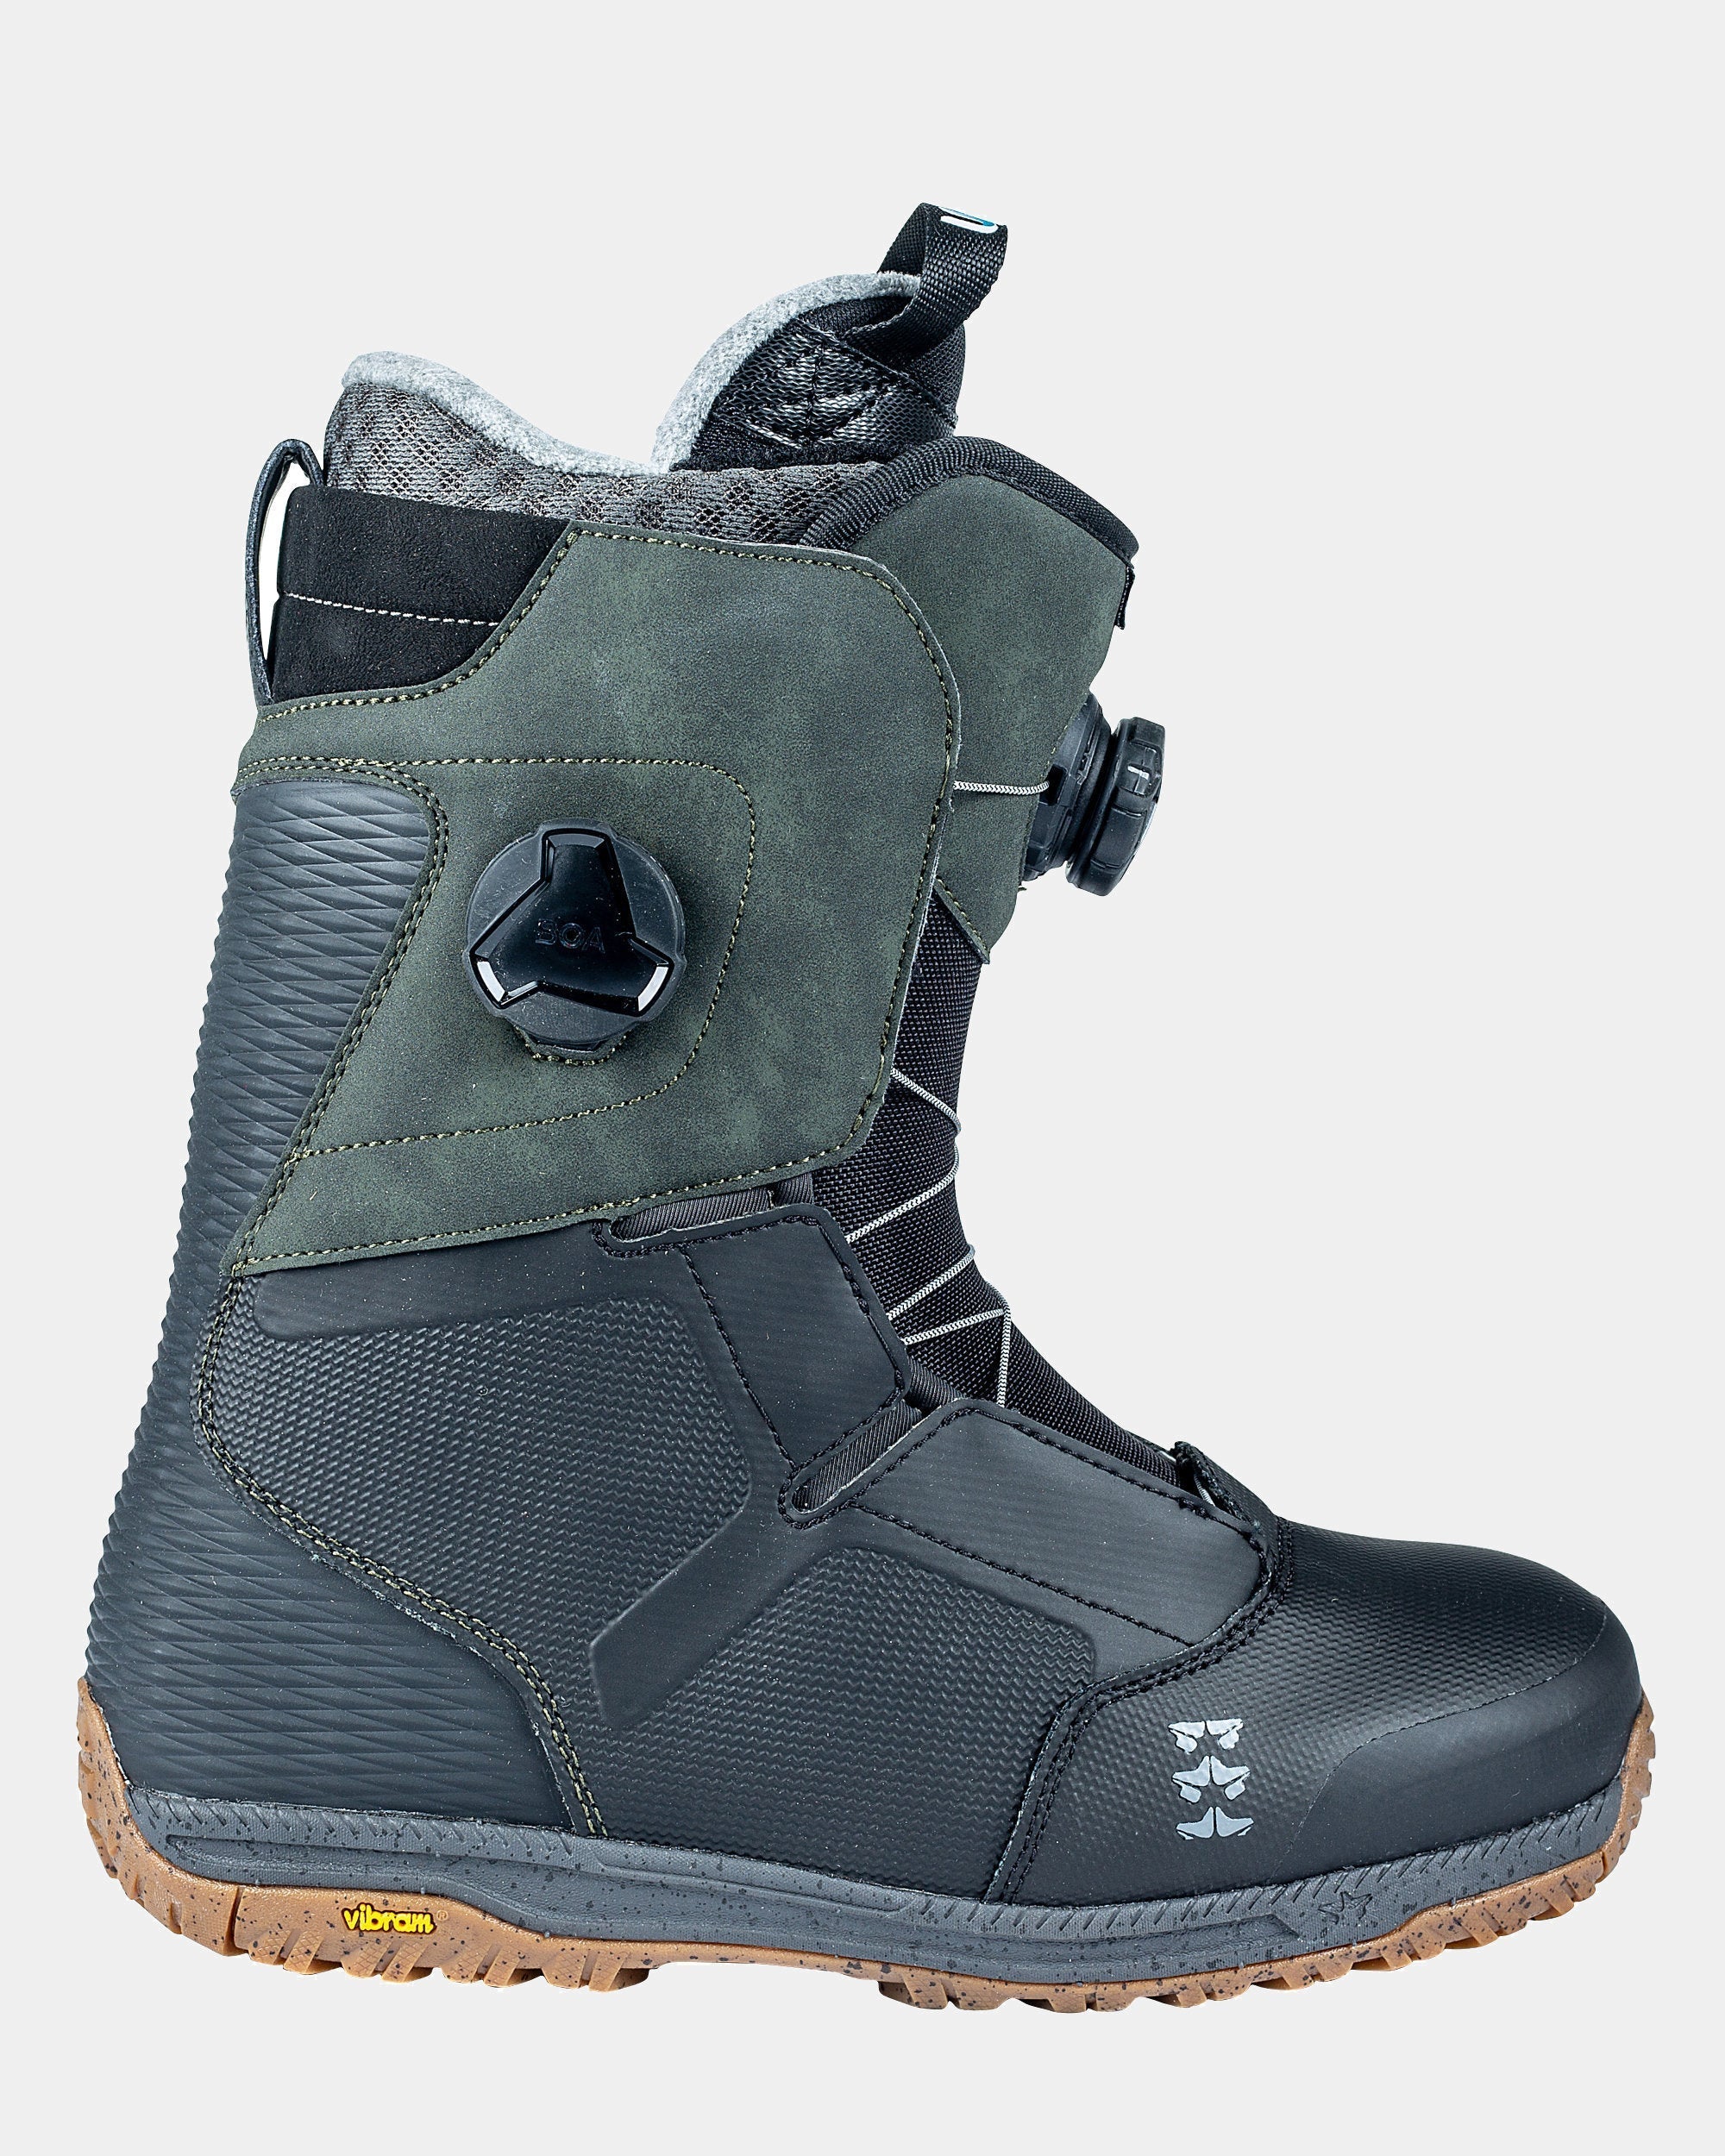 Rome Snowboard Boots – Rome SDS EU